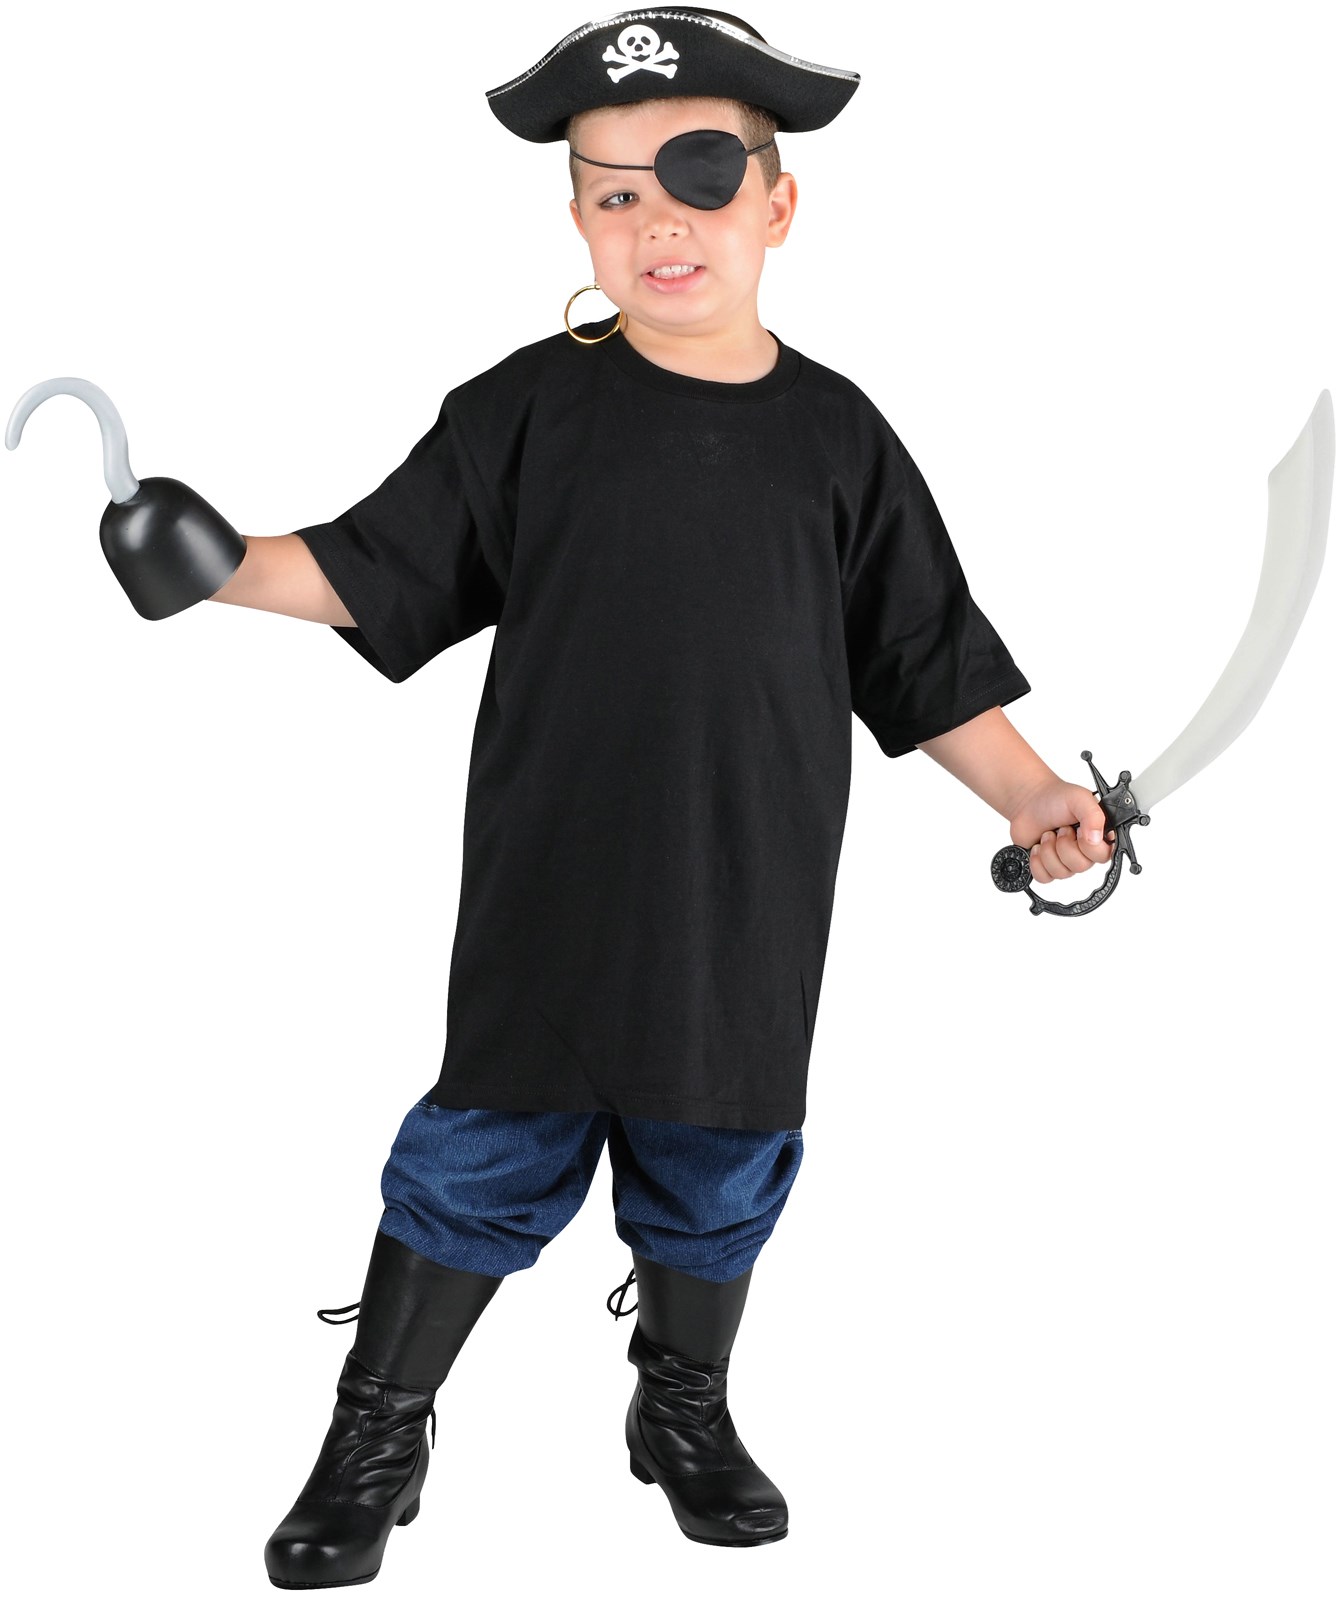 Pirate Child Costume Kit